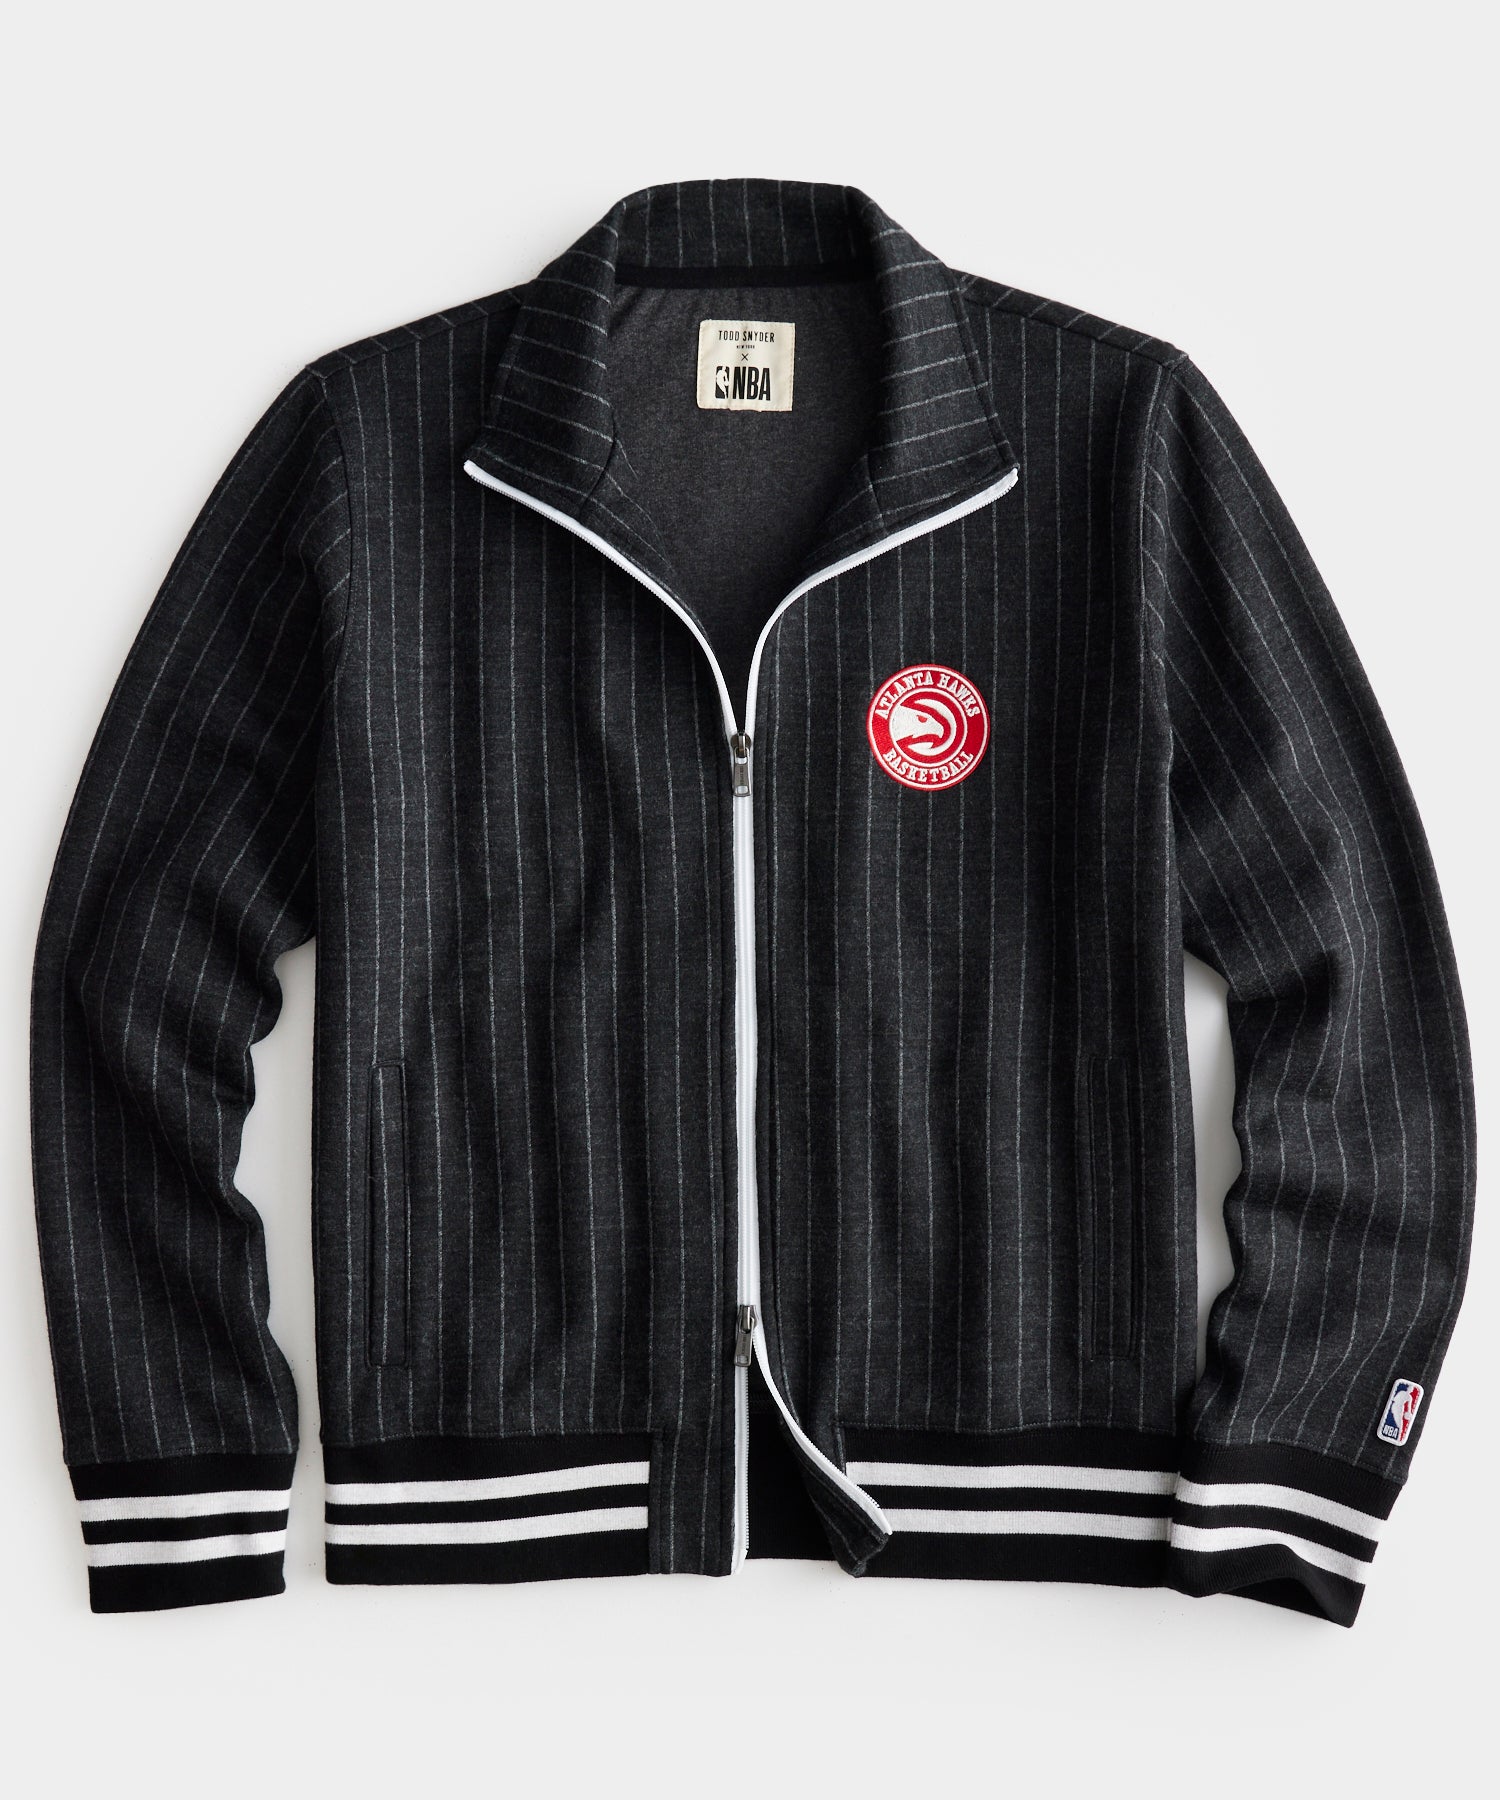 Mitchell & Ness NBA Atlanta Hawks Jacket - RockStar Jacket